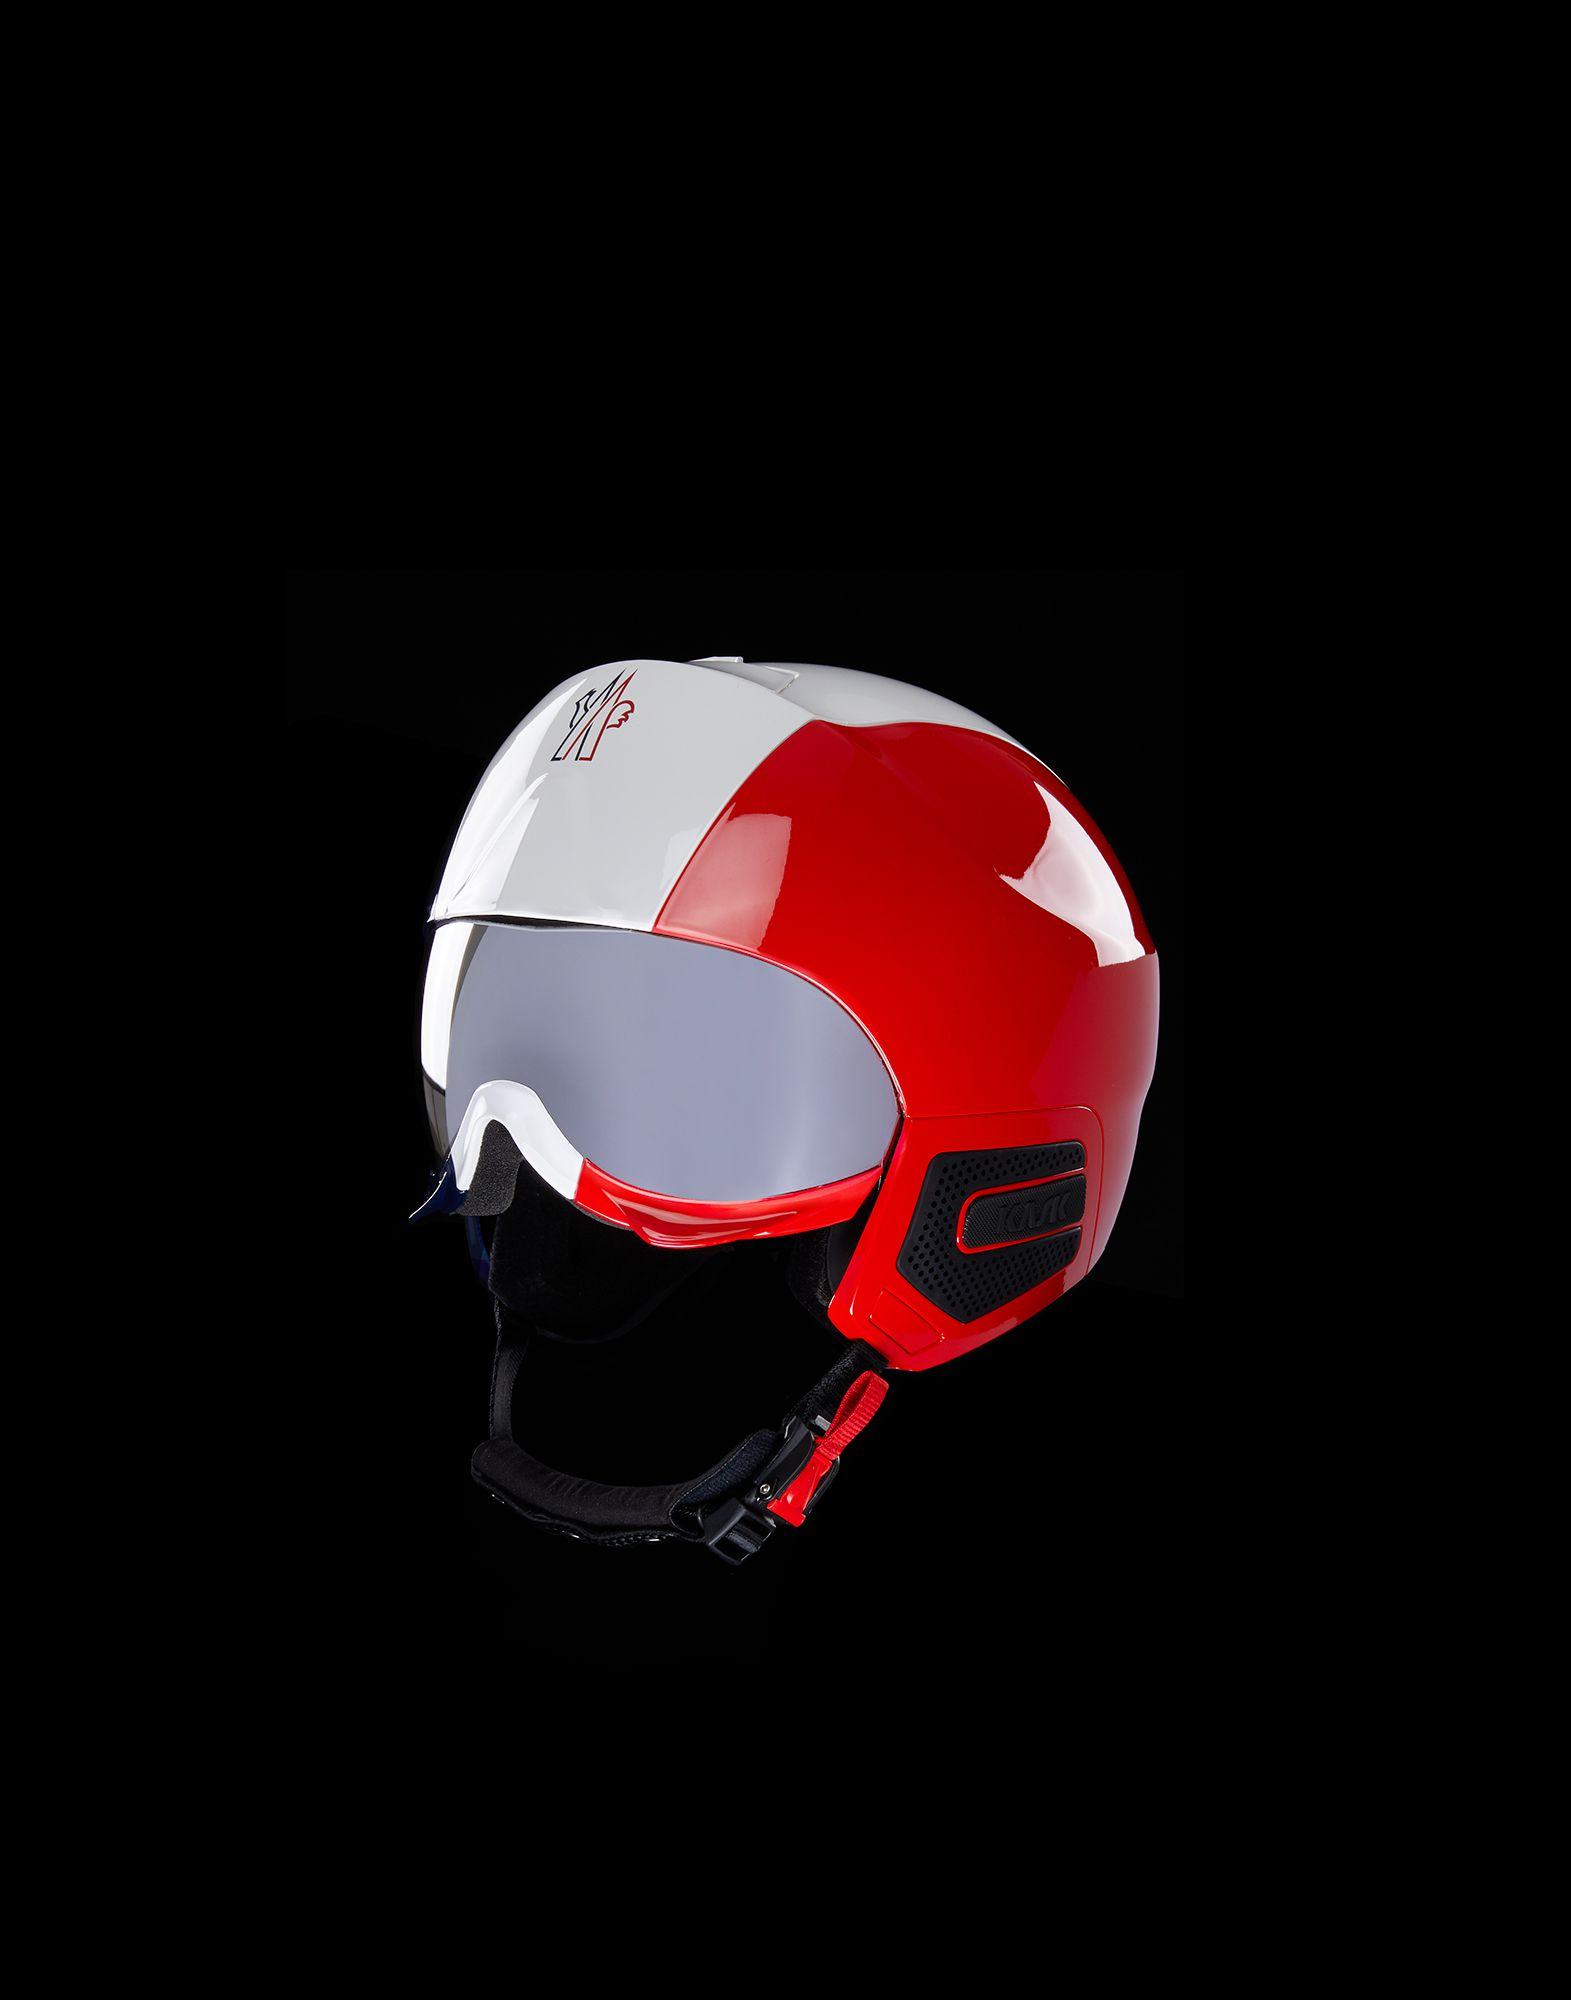 Moncler Helmet Best Sale, 60% OFF | www.ingeniovirtual.com